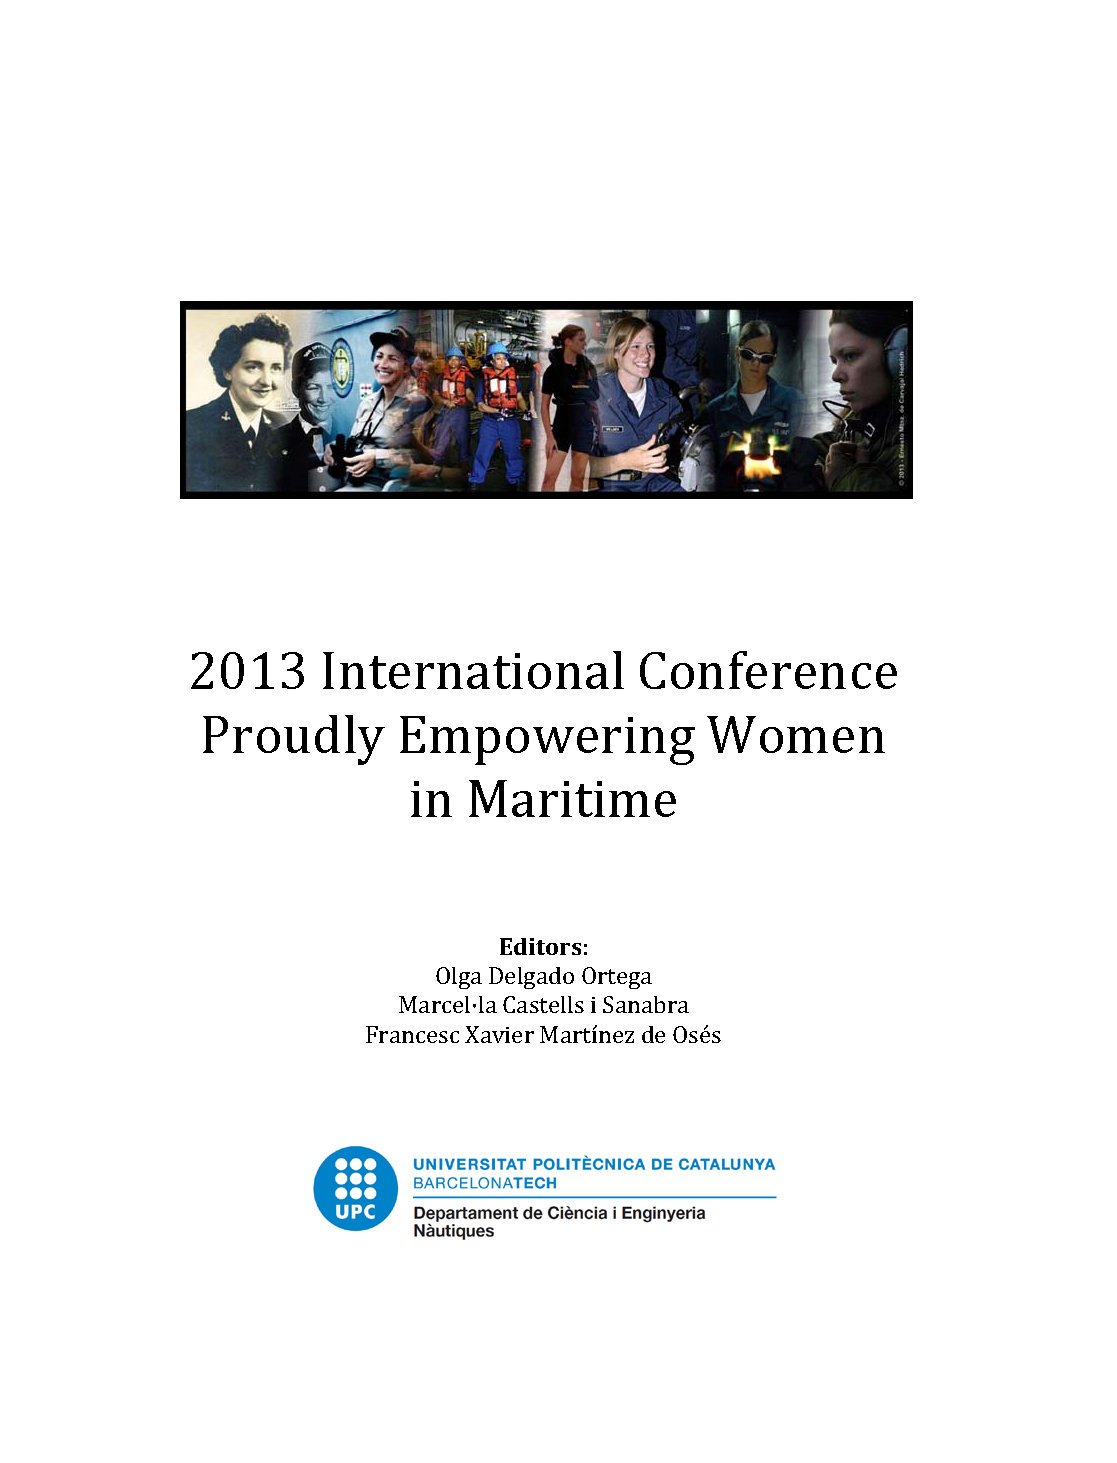 Imagen de portada del libro 2013 International Conference Proudly Empowering Women in Maritime|